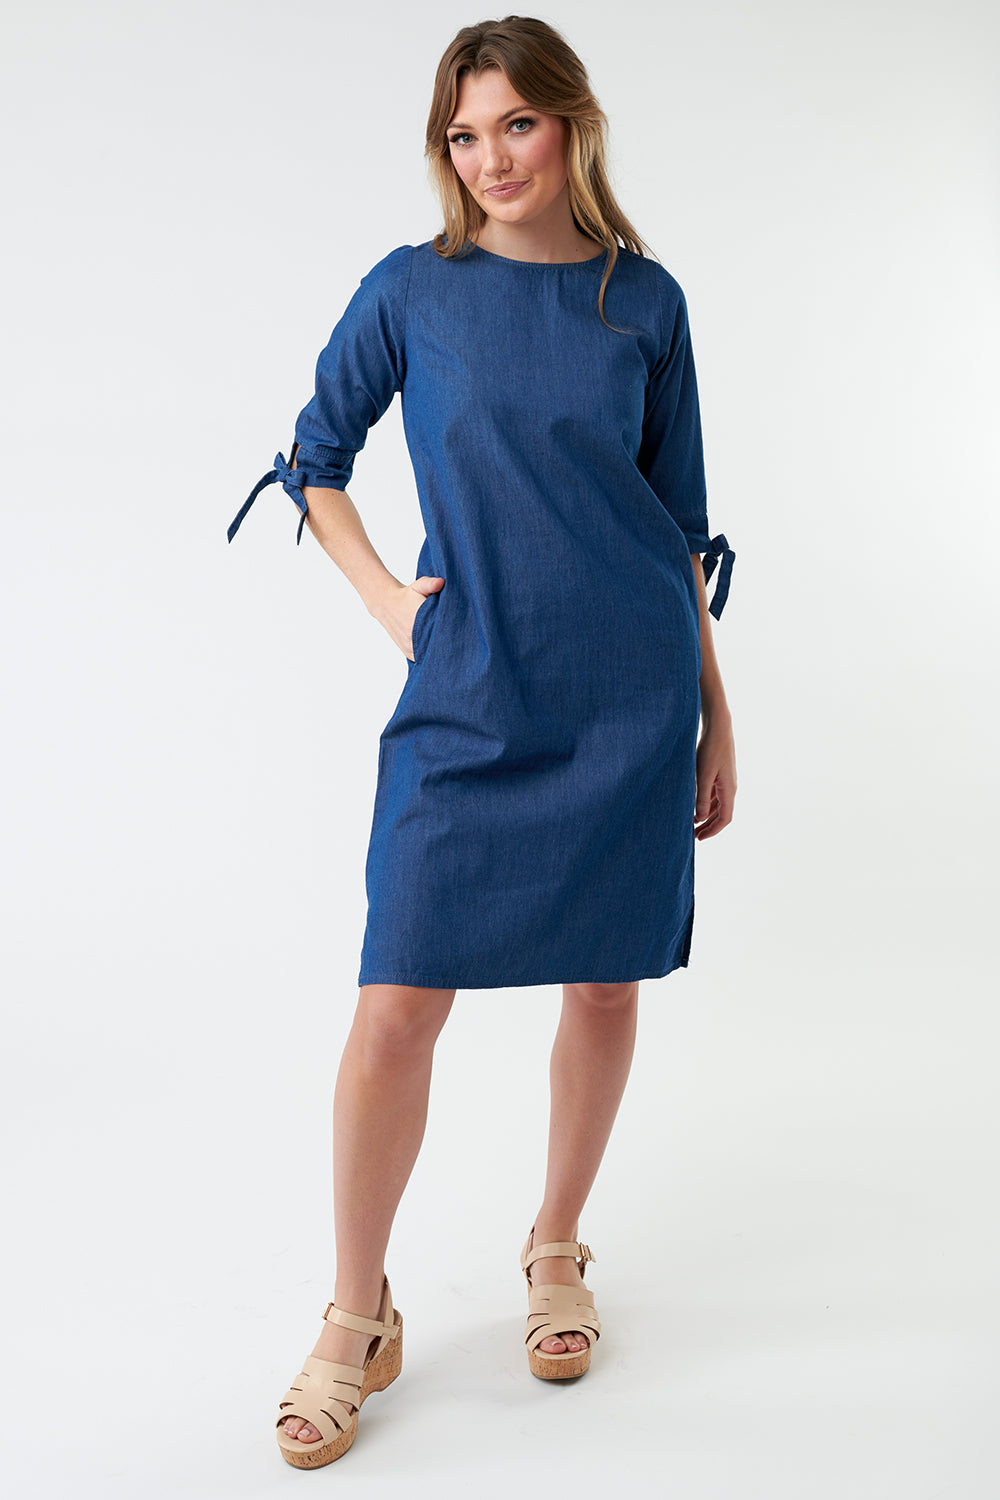 knee length 1/2 sleeve denim sheath dress, modest dresses, tznius dress